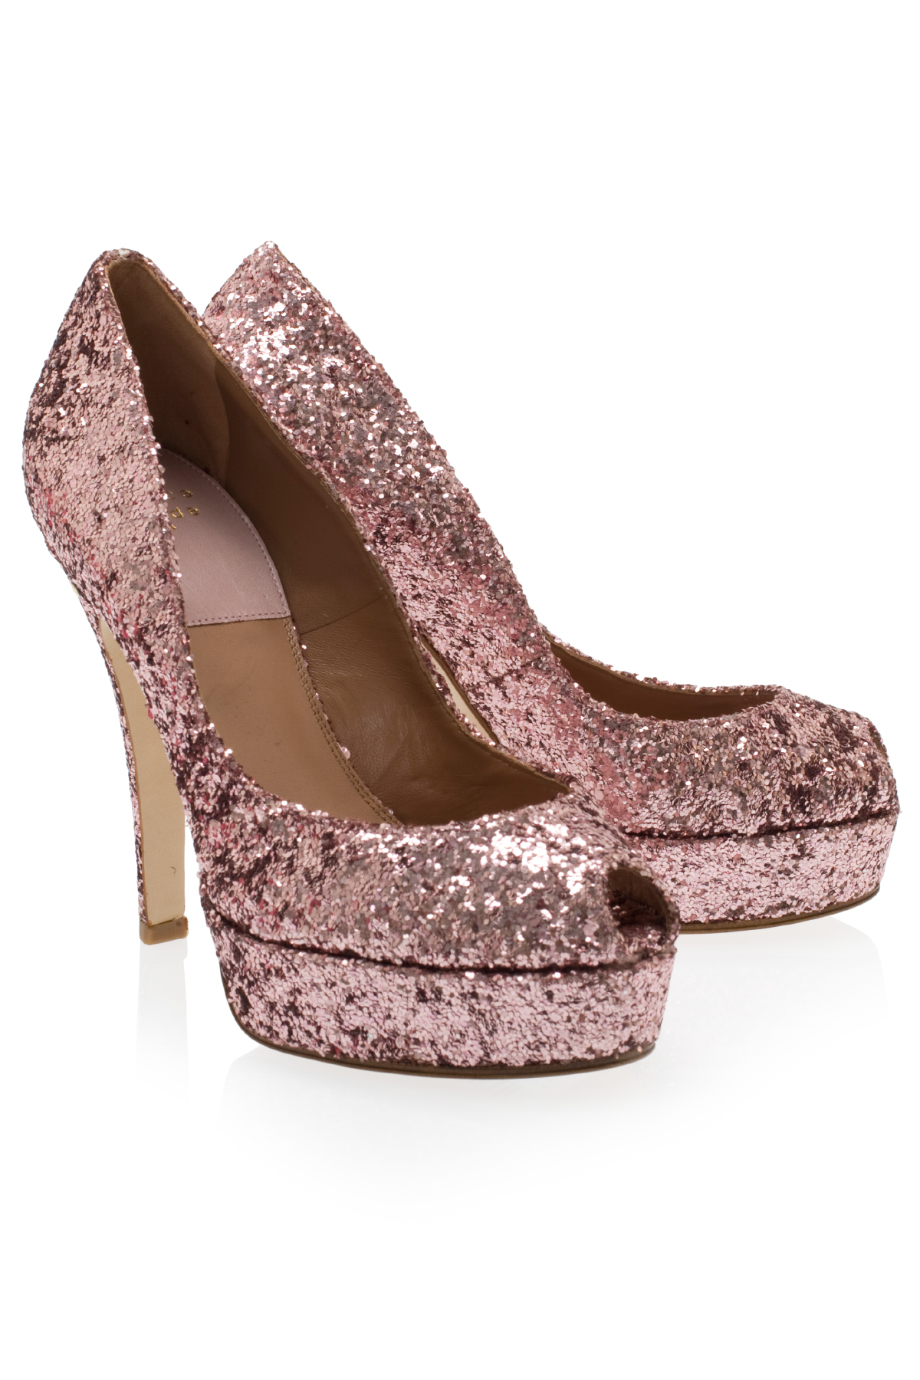 Lyst - Laurence Dacade Jungle Glitter Peeptoe Heels in Pink